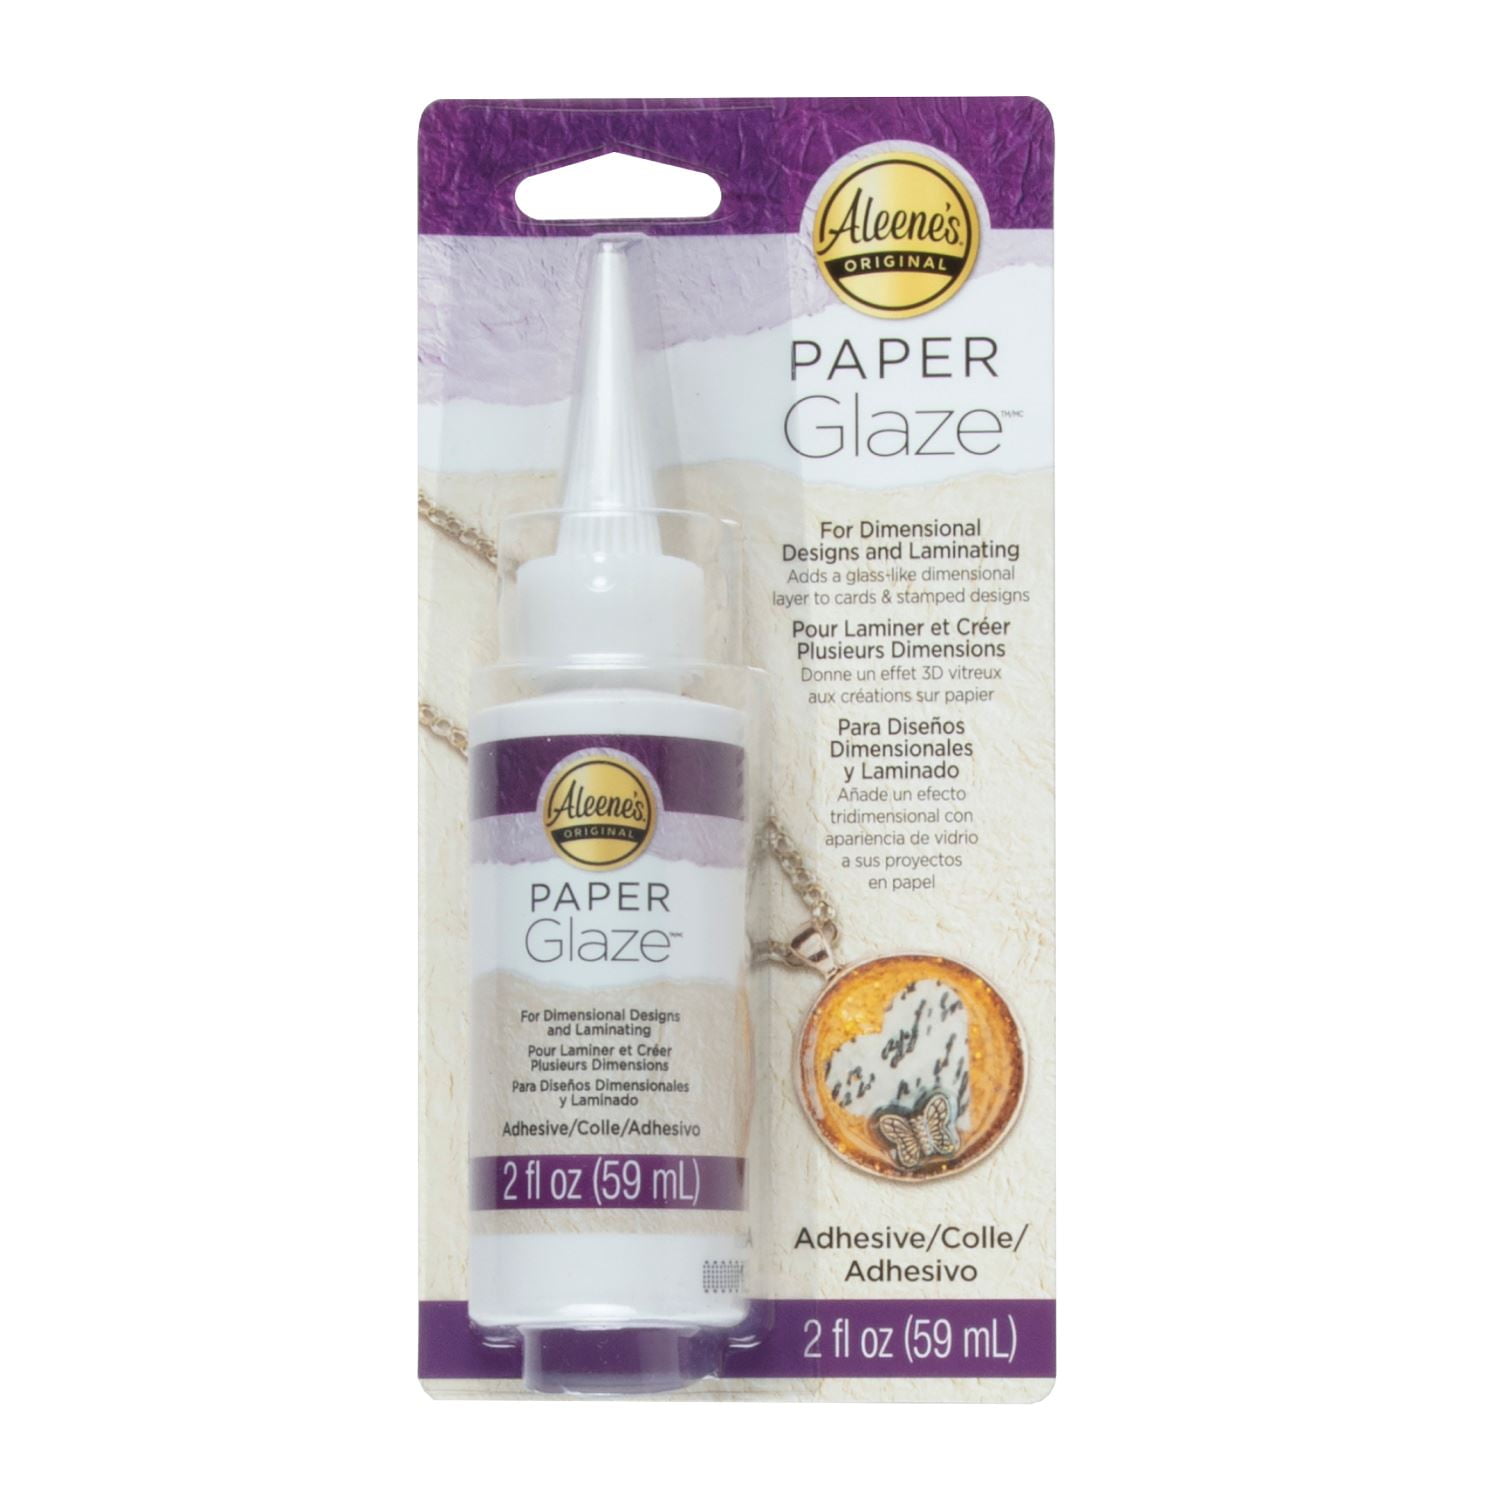 Aleene's Original Glues - Seal Your Painted Rocks with Acrylic Spray Sealer